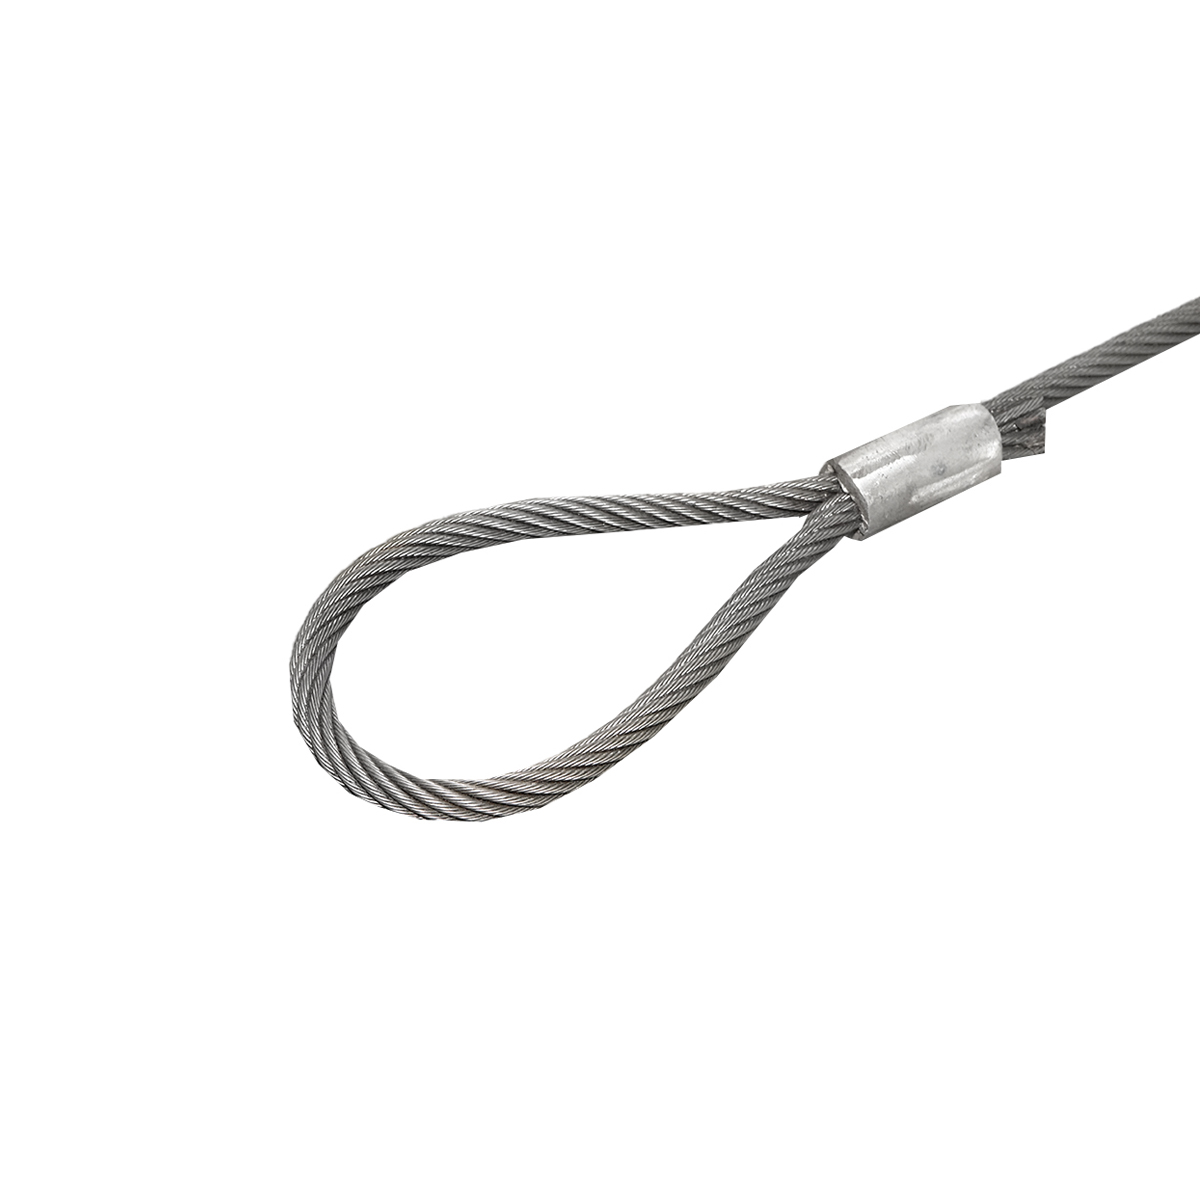 Cablu/sufa troliu din otel cu grosime de 18mm si lungime de 4m cu inele pentru tractat sau ridicat